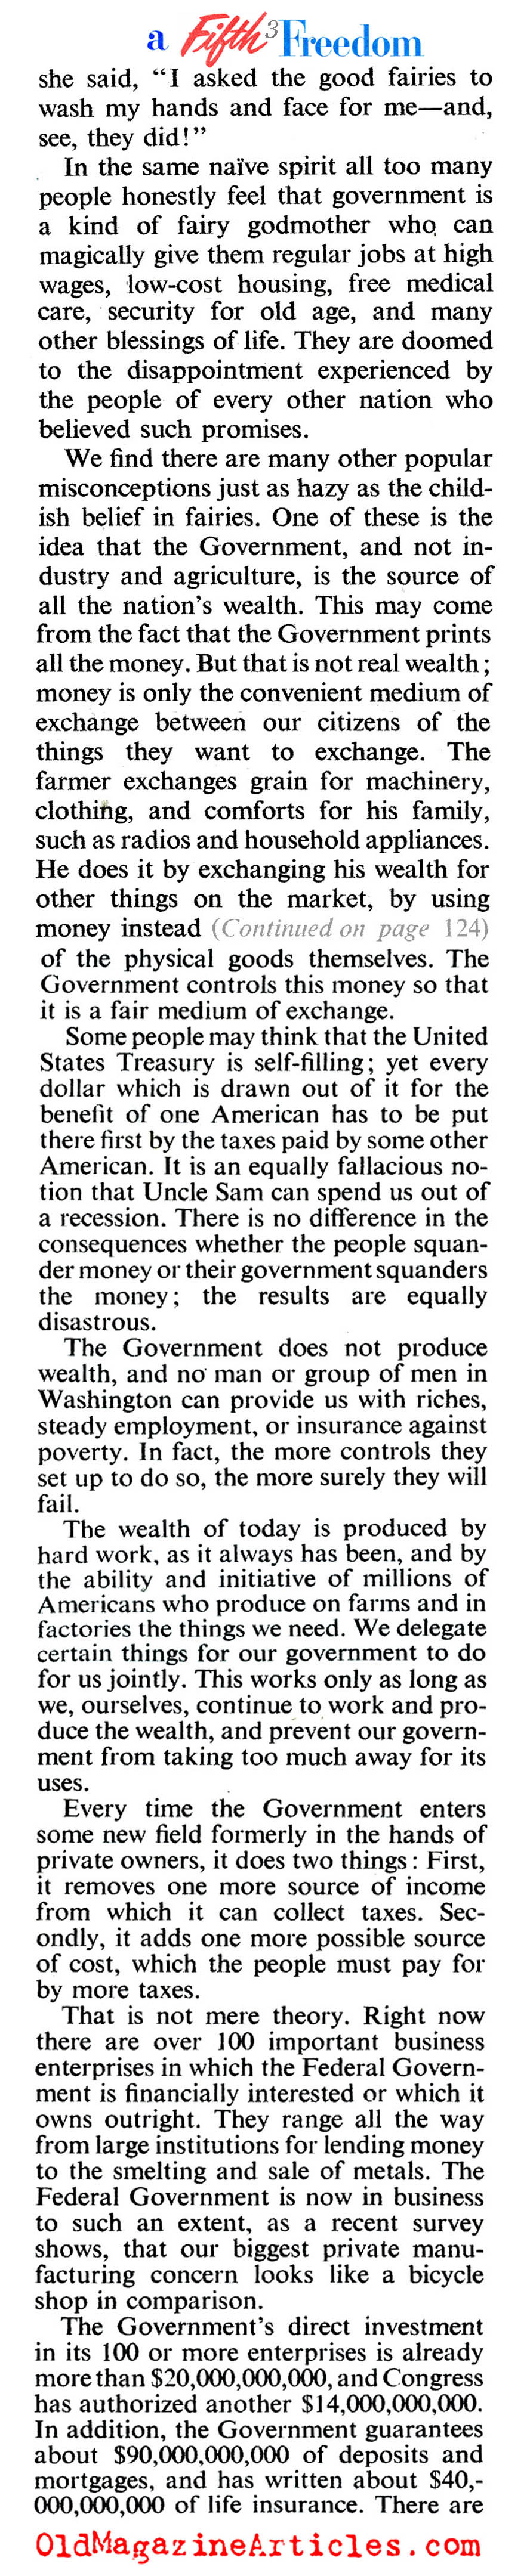 Socialism Bad (The American Magazine, 1949)